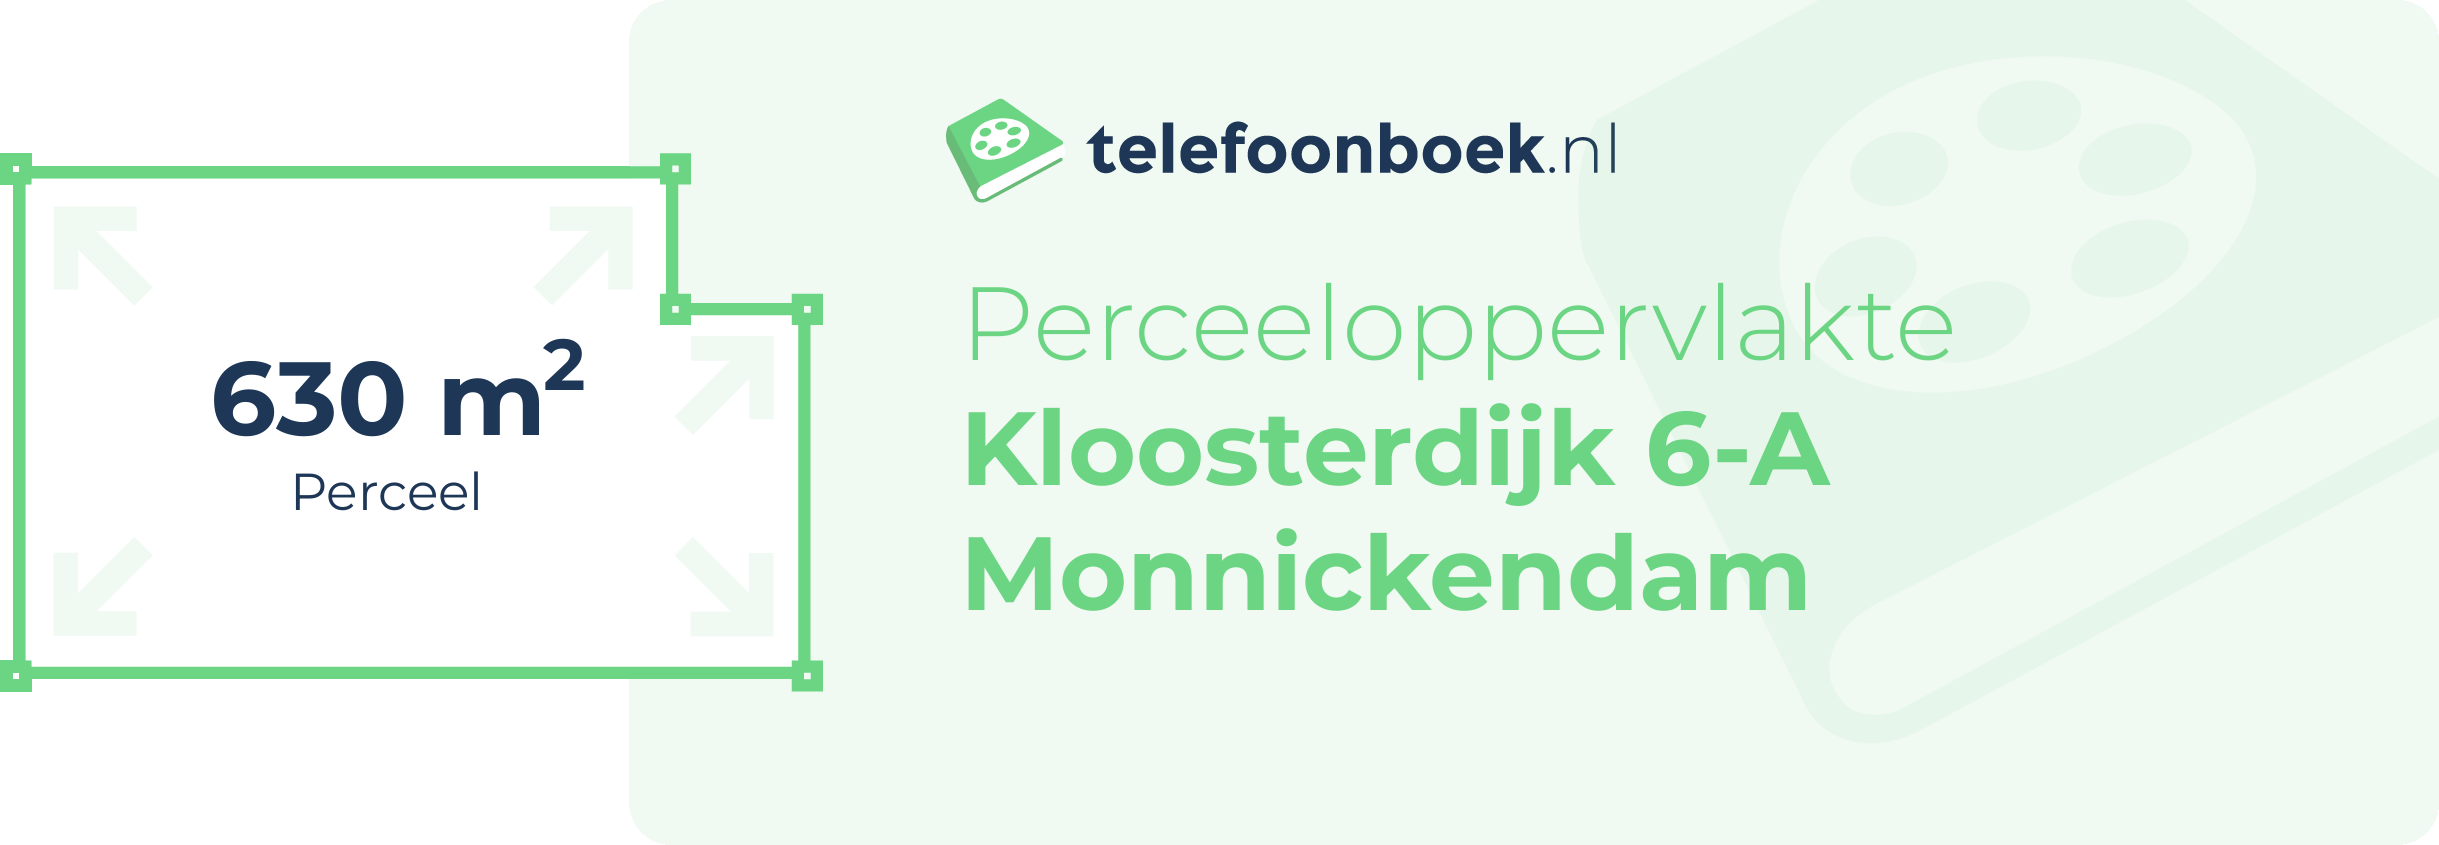 Perceeloppervlakte Kloosterdijk 6-A Monnickendam